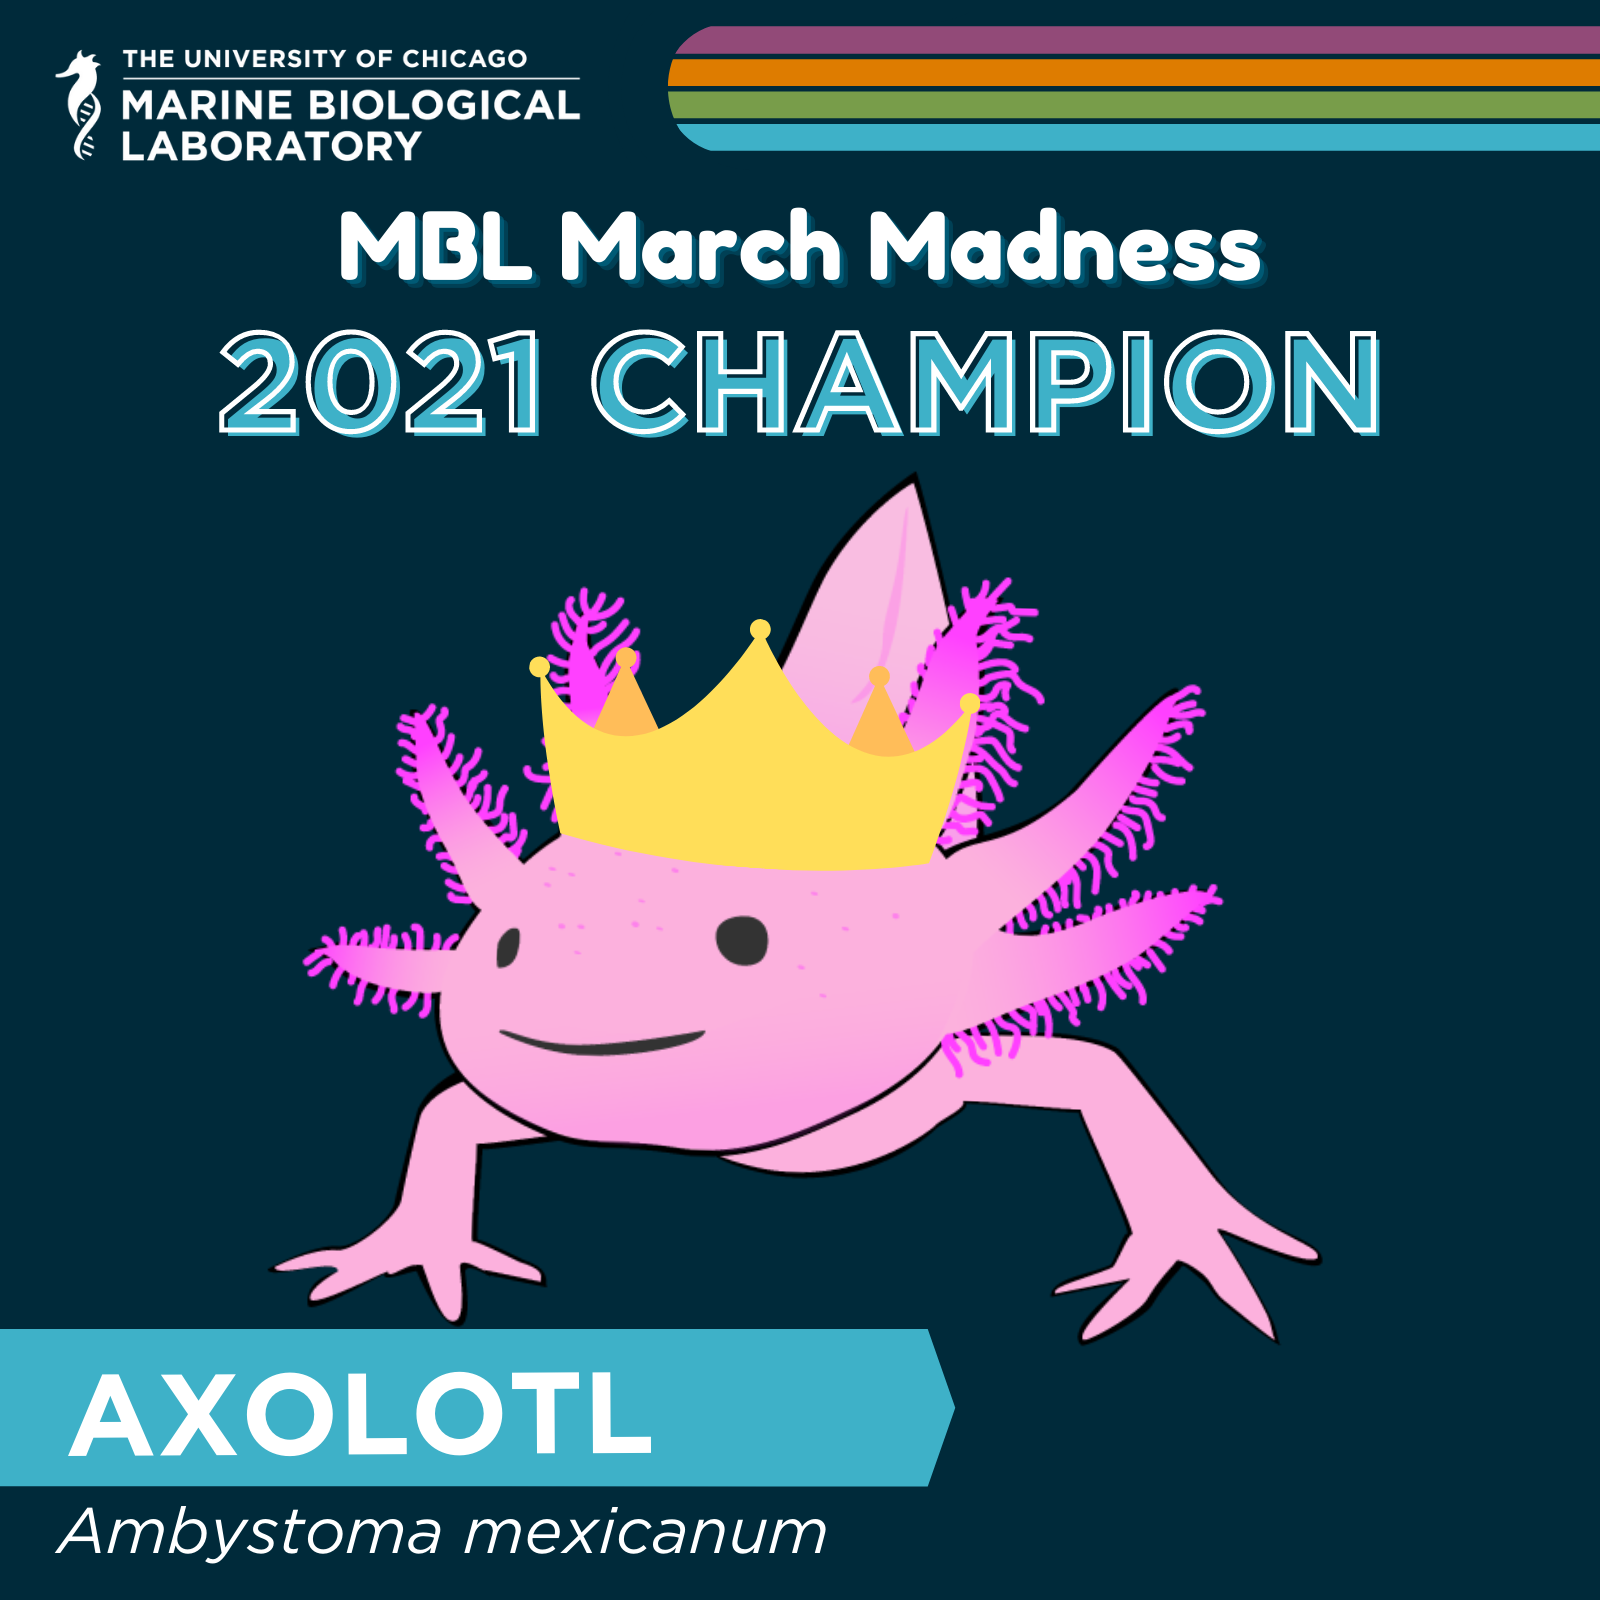 mbl march madness 2021 champion: The Axolotl!